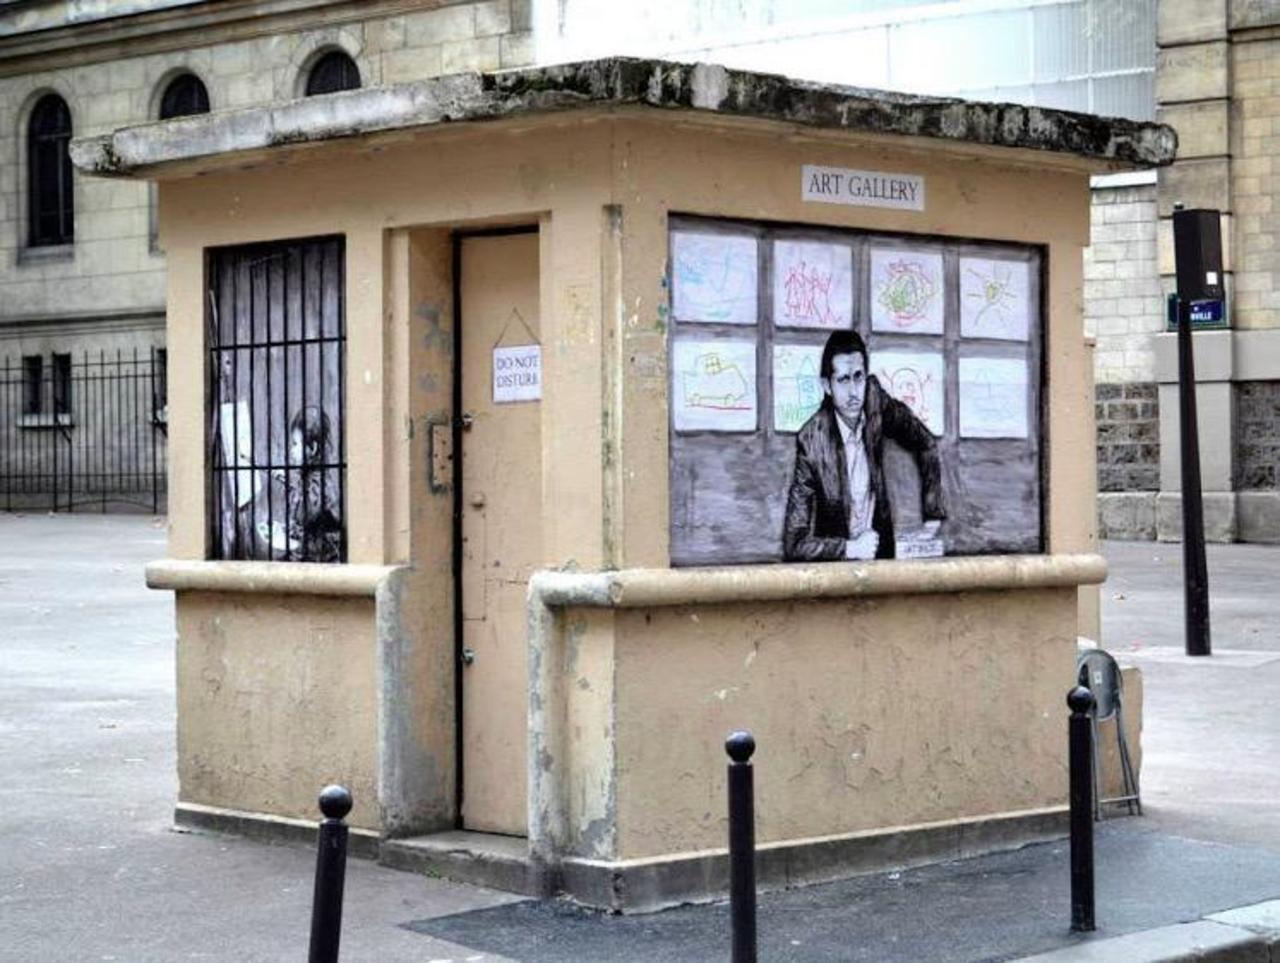 #streetart by #Levalet in #Paris #switch #graffiti #bedifferent #art #art http://t.co/lgA0UeBzau